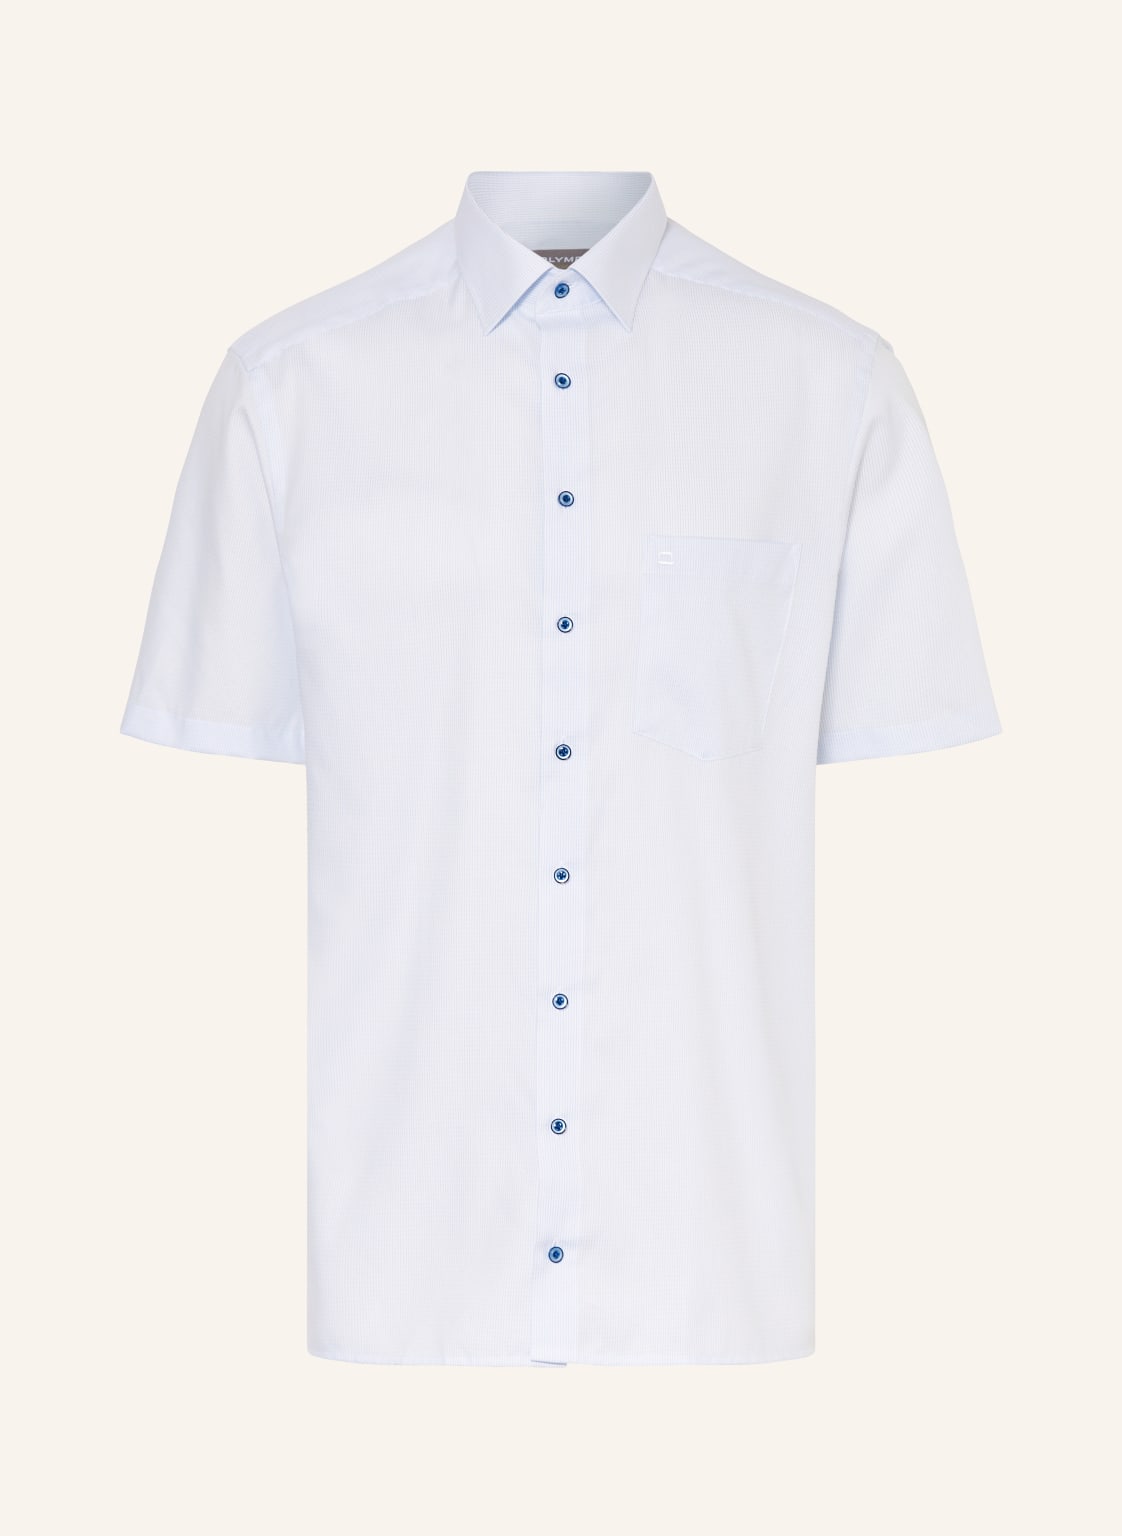 Olymp Kurzarm-Hemd Luxor Comfort Fit blau von Olymp